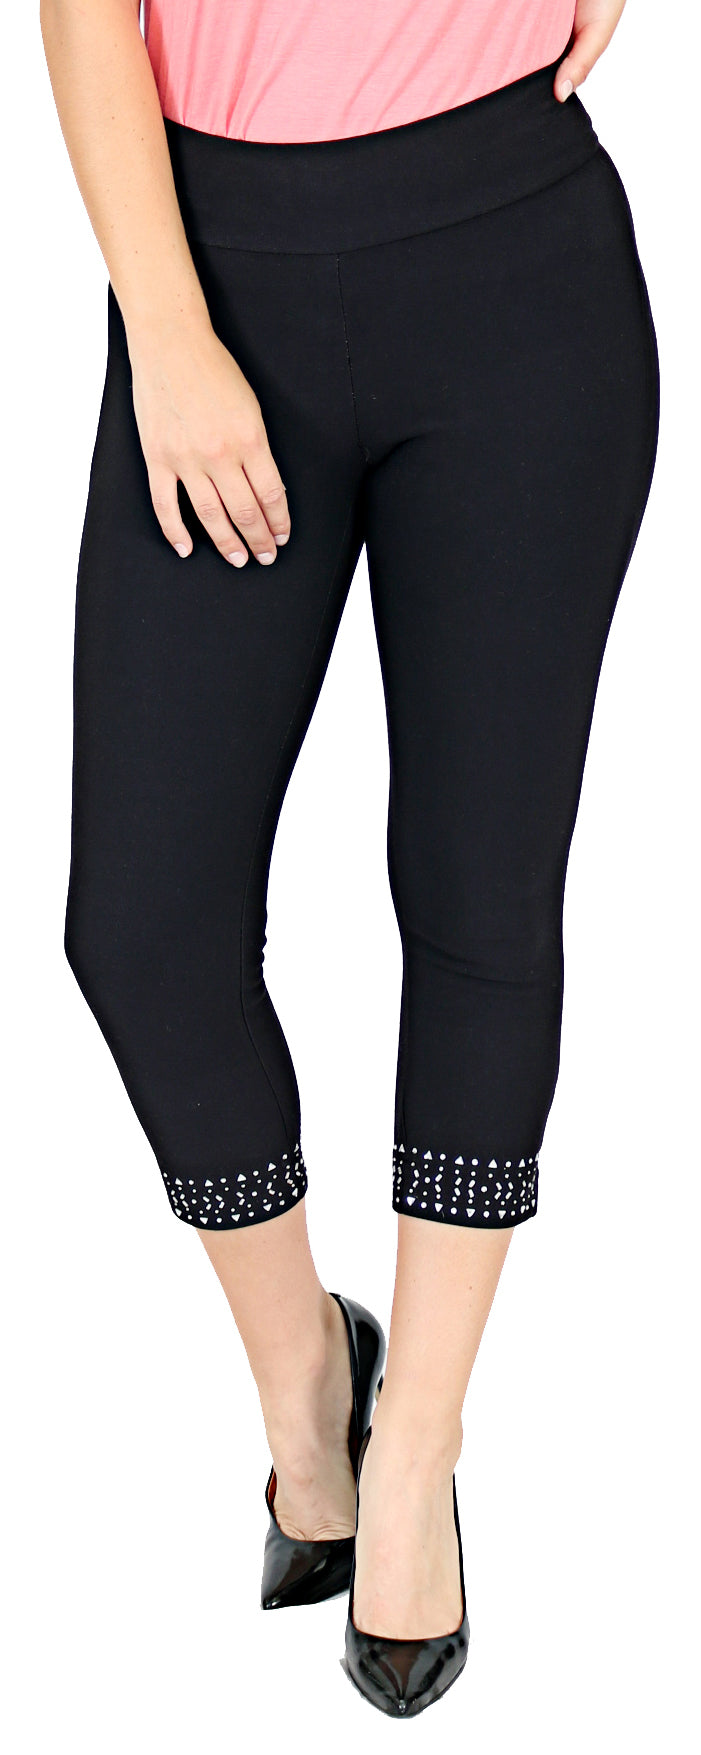 TrueSlim™ Black Capri Leggings with Stone – TrueSlim Jeans